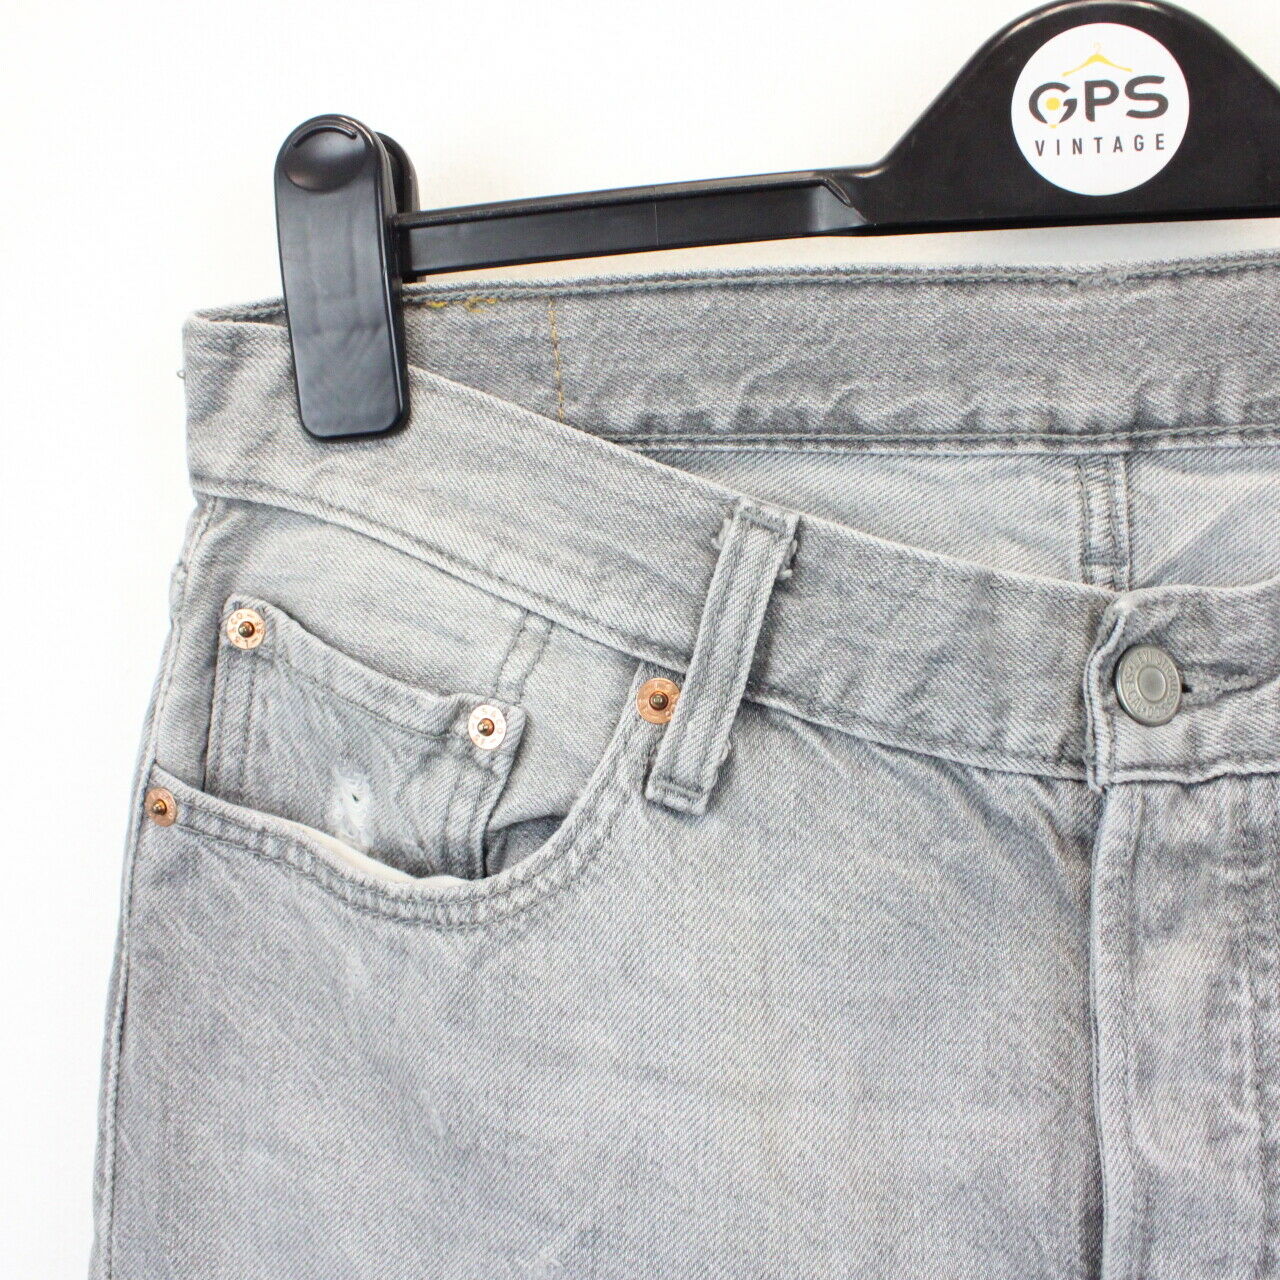 LEVIS 501 CT Jeans Grey Charcoal | W33 L30